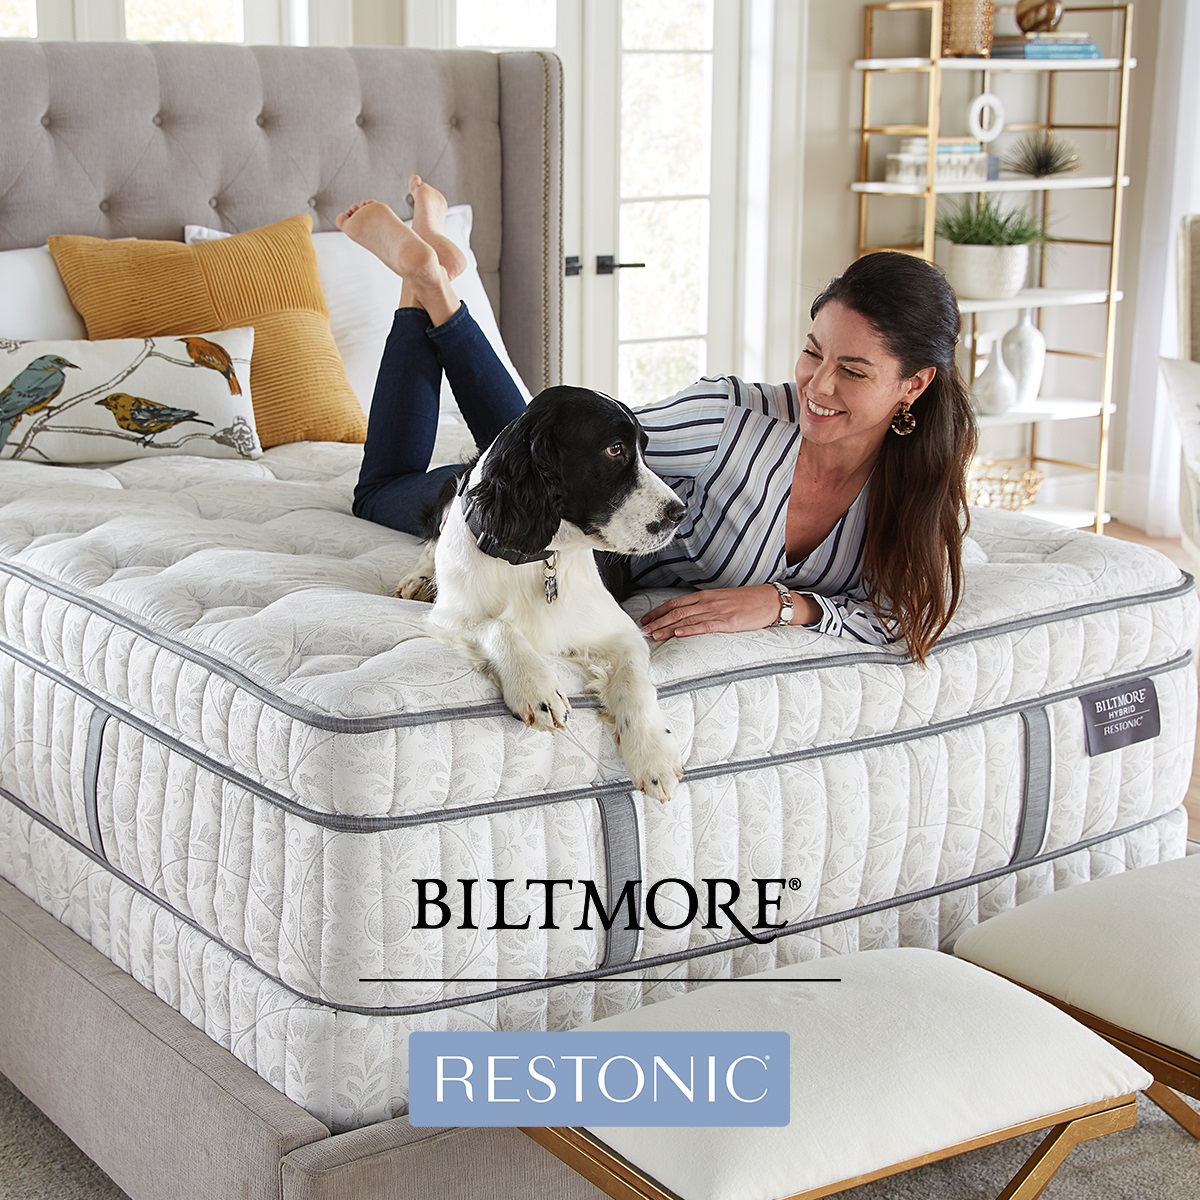 Biltmore by Restonic mattresses